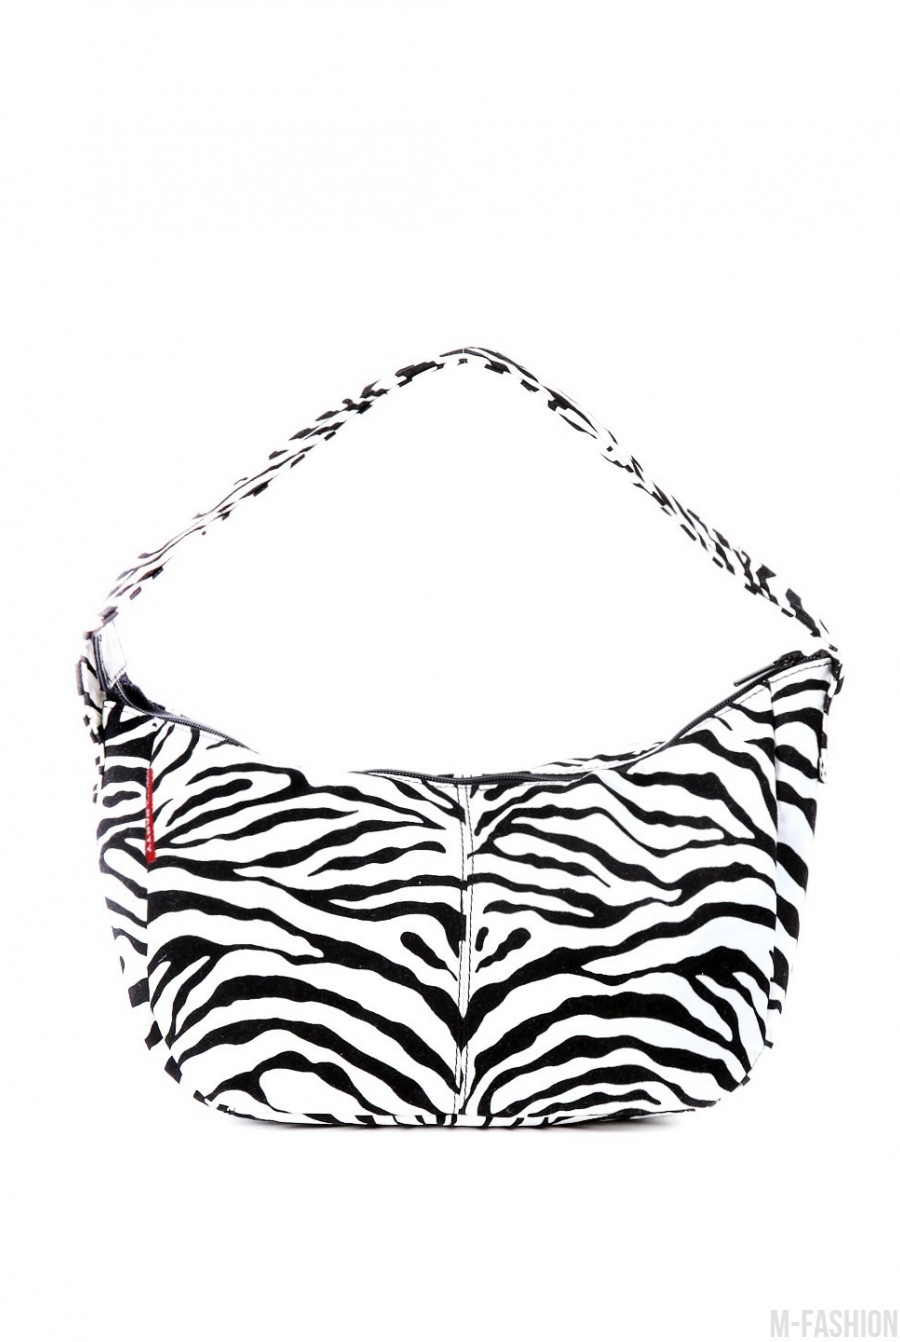 Компактная кожаная сумка под зебру - Фото 1